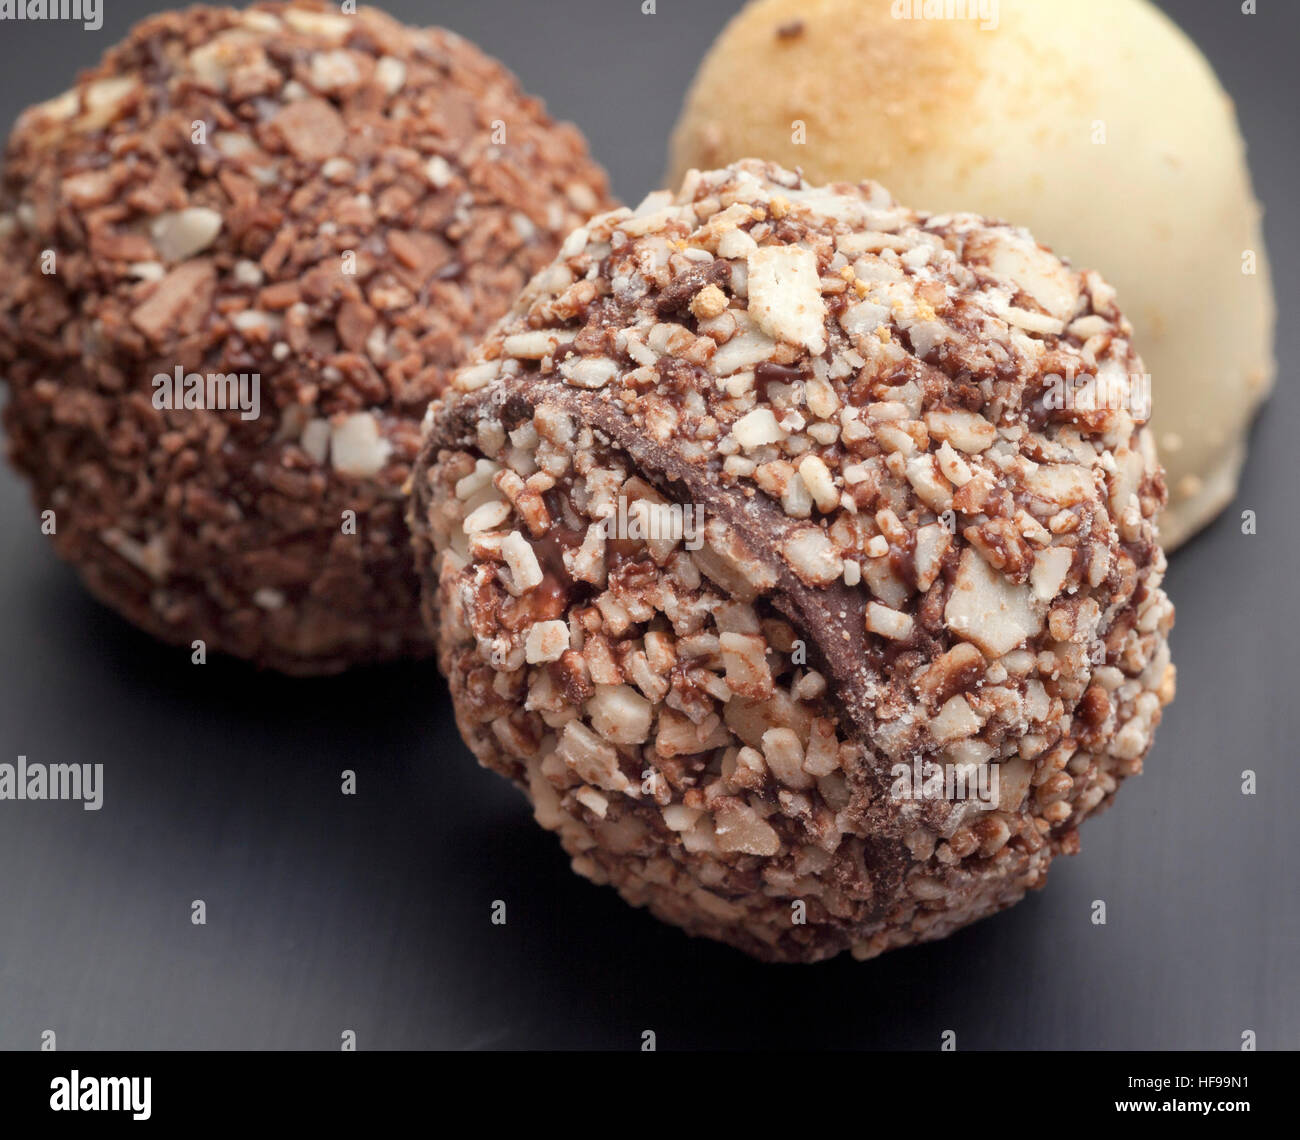 Chocolate truffles confectionery Stock Photo